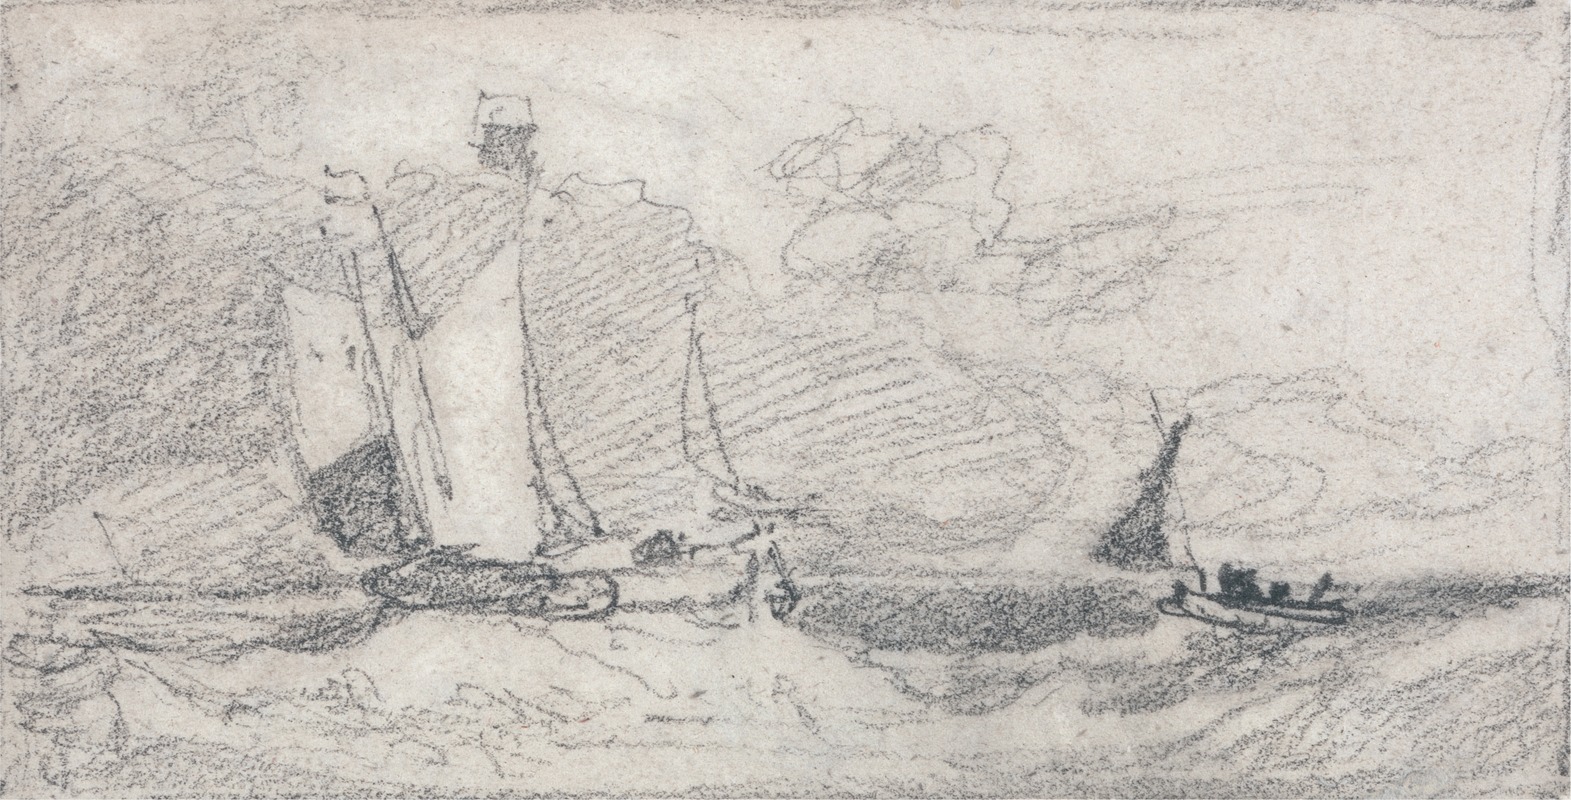 John Sell Cotman - Sailing Wherries and Boats in a Choppy Sea